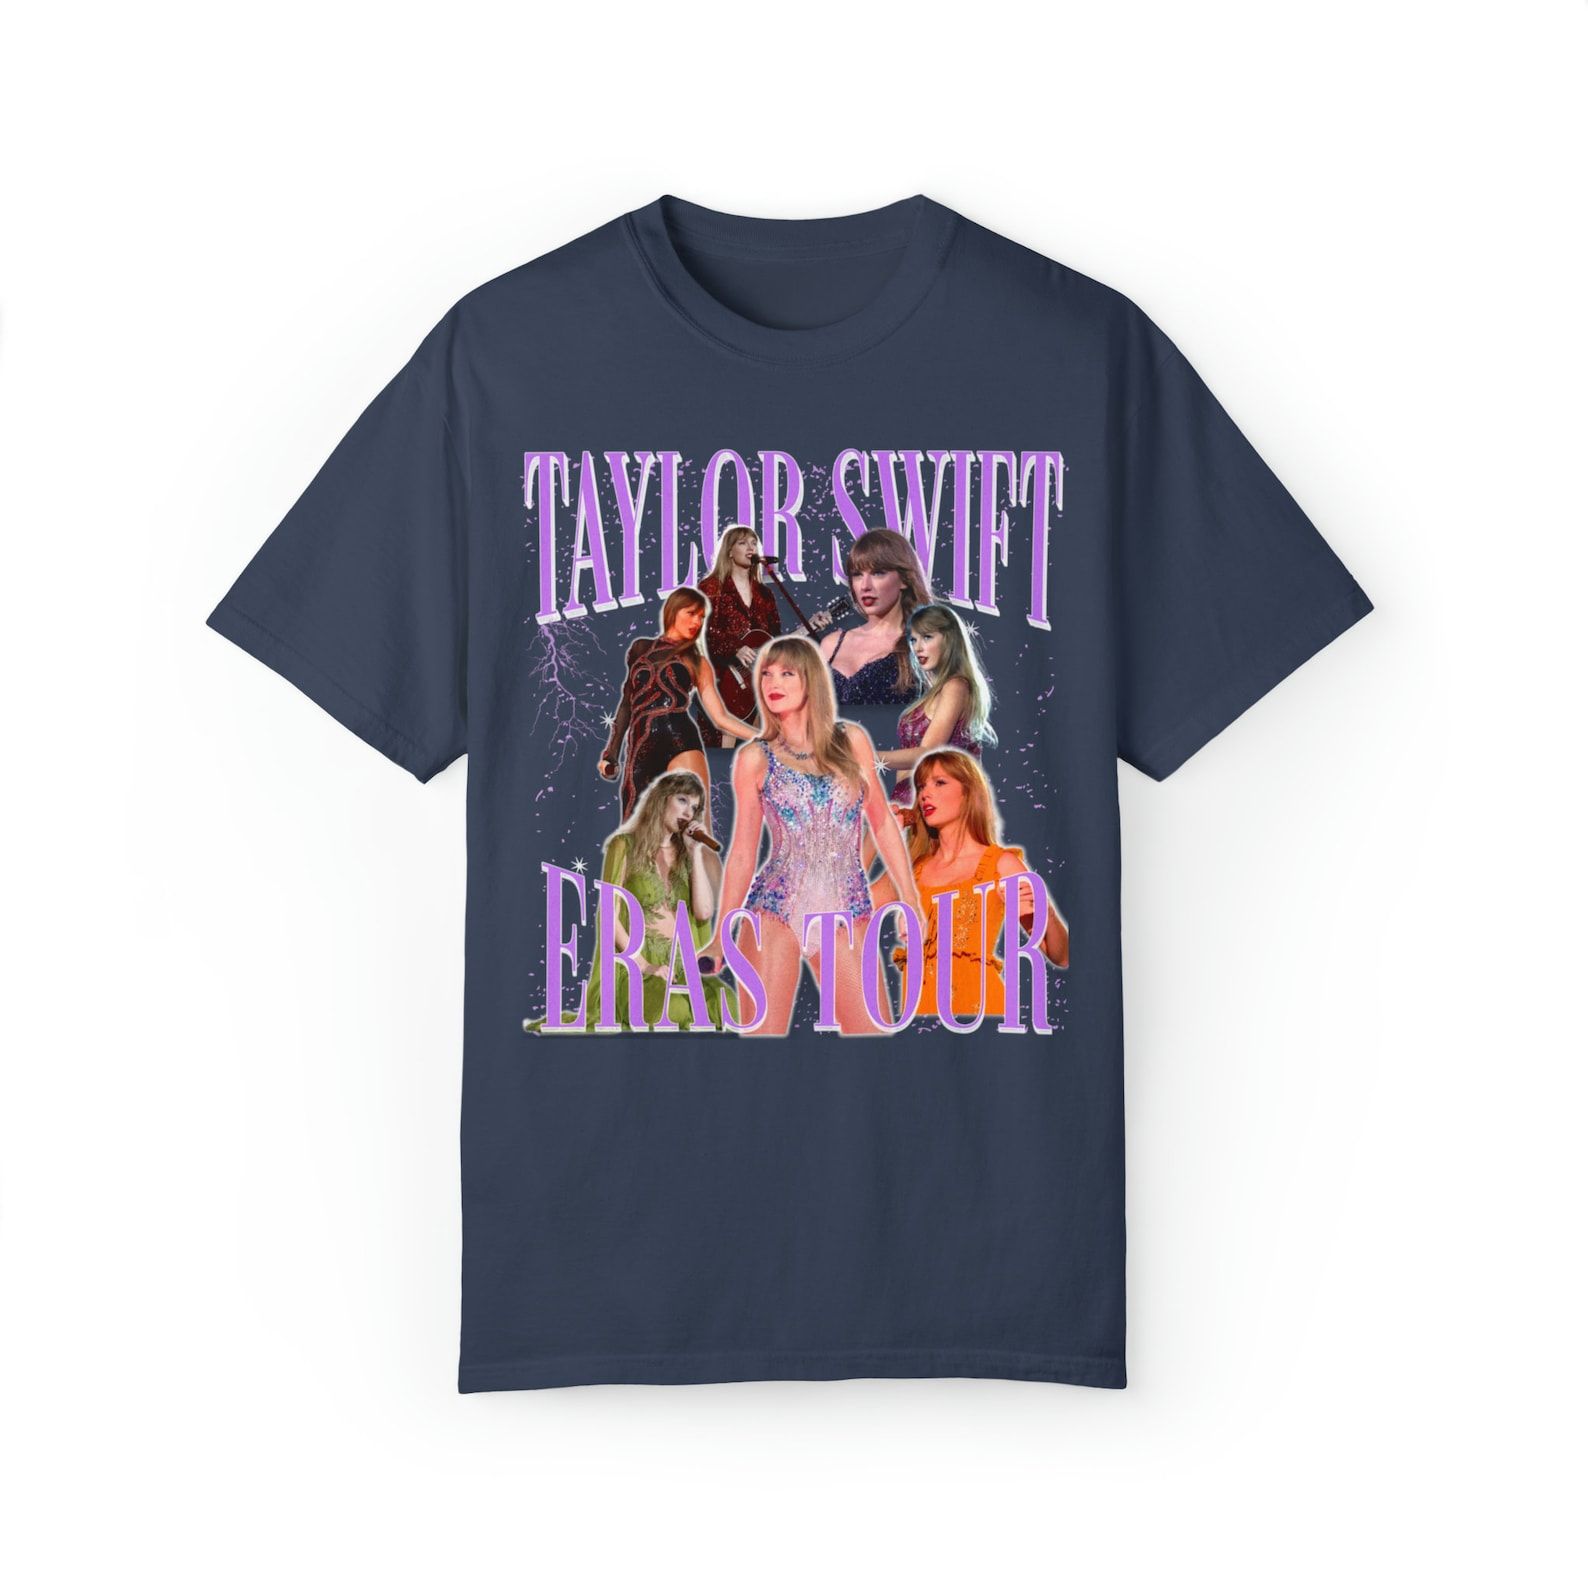 Swifties: Here's Where to Buy Taylor Swift Eras Tour Merch